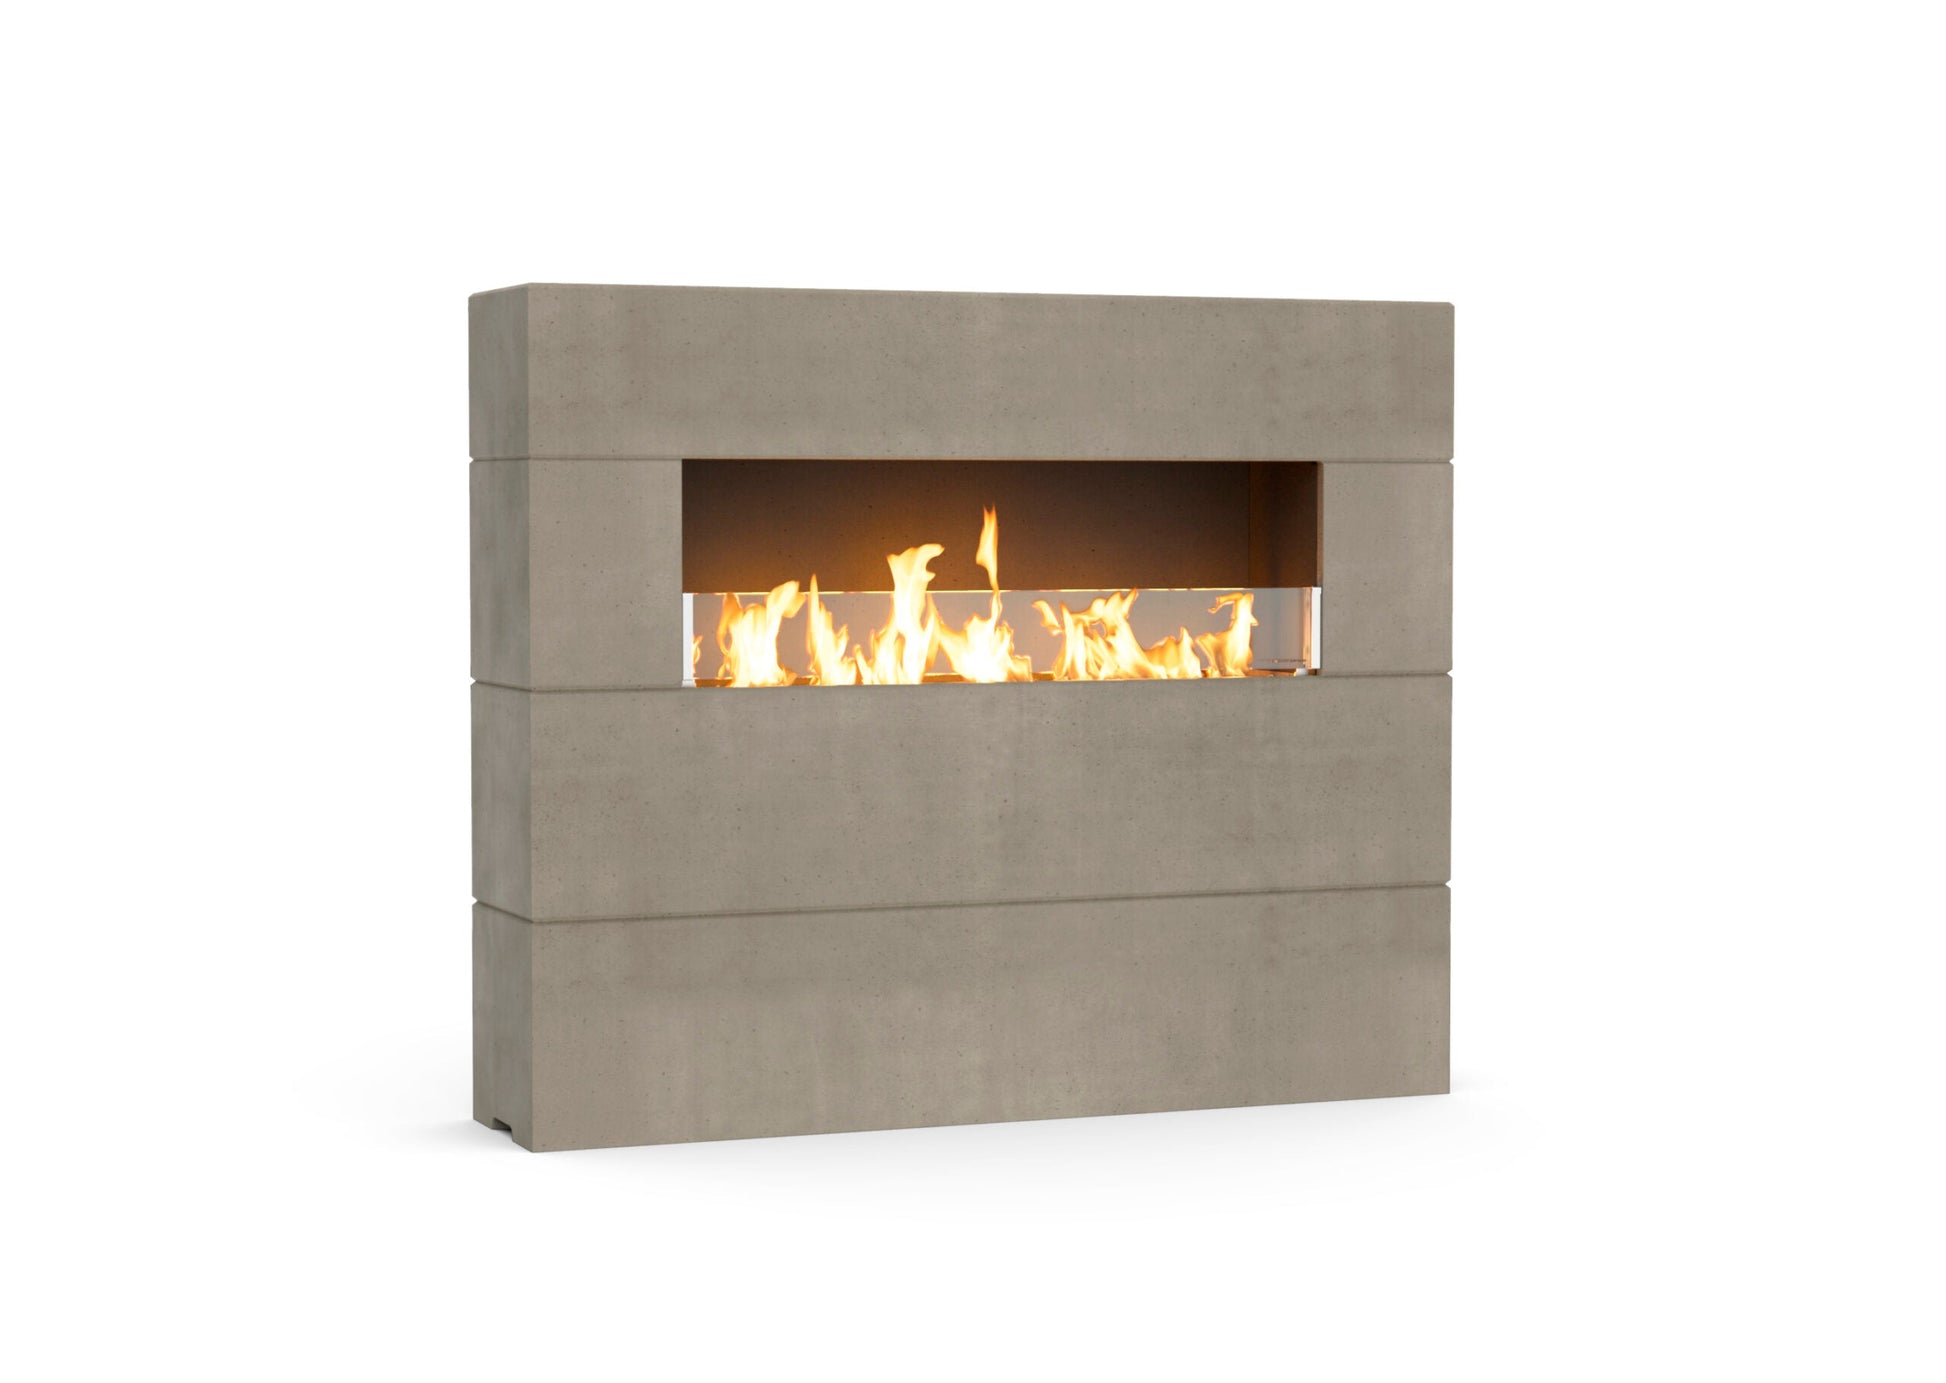 American Fyre Designs Milan Tall 60" Smoke Propane Gas Fireplace with FyreStarter Bluetooth Control